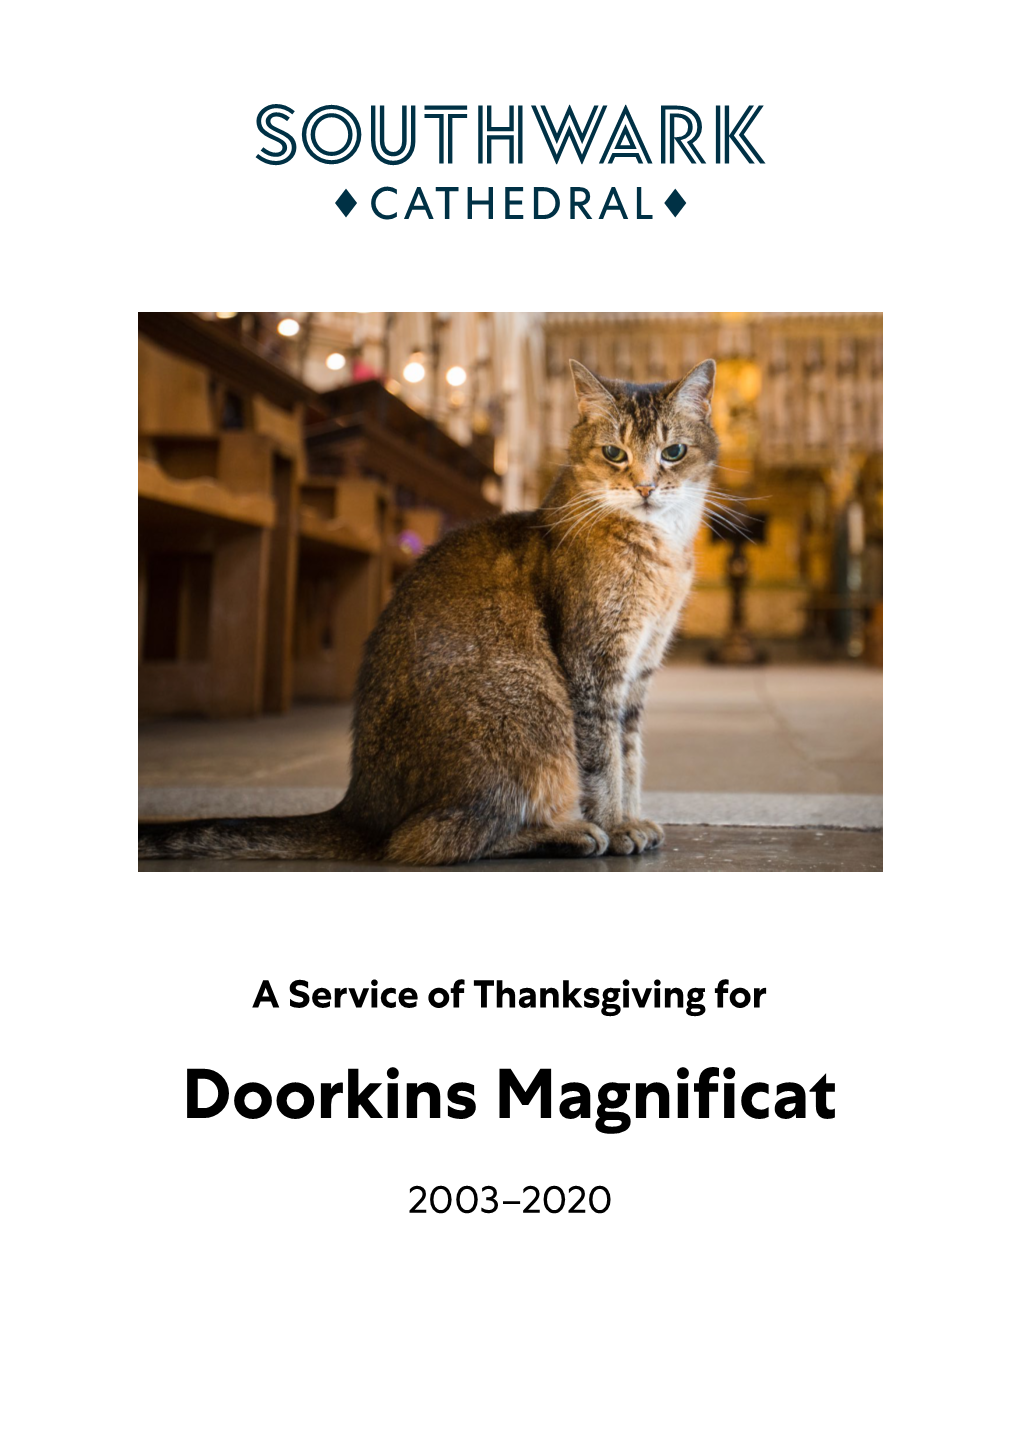 Doorkins Magnificat